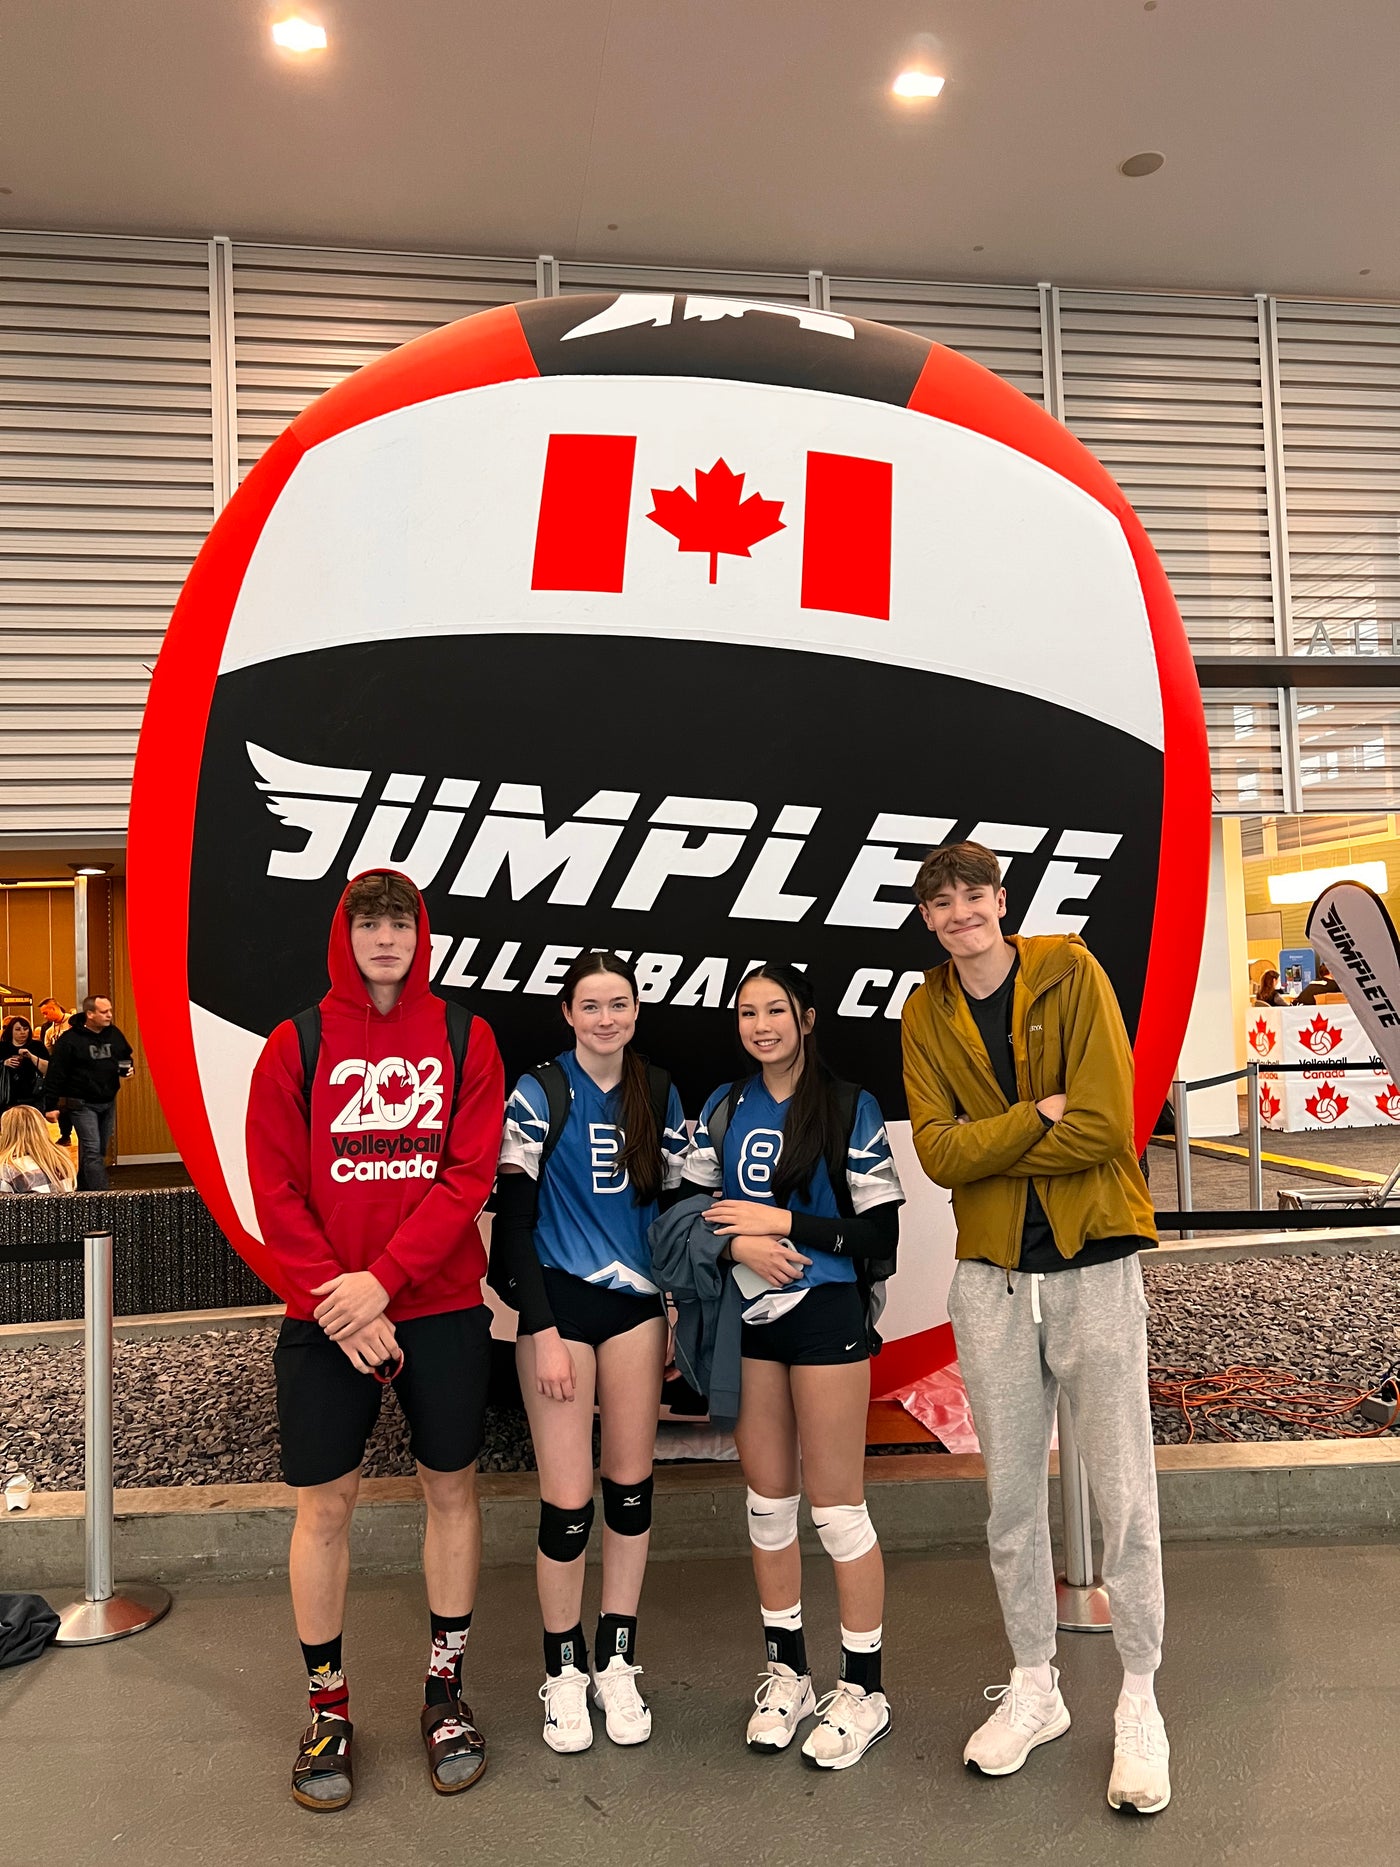 Jumplete Canada │ Volleyball Knee Braces + Gear